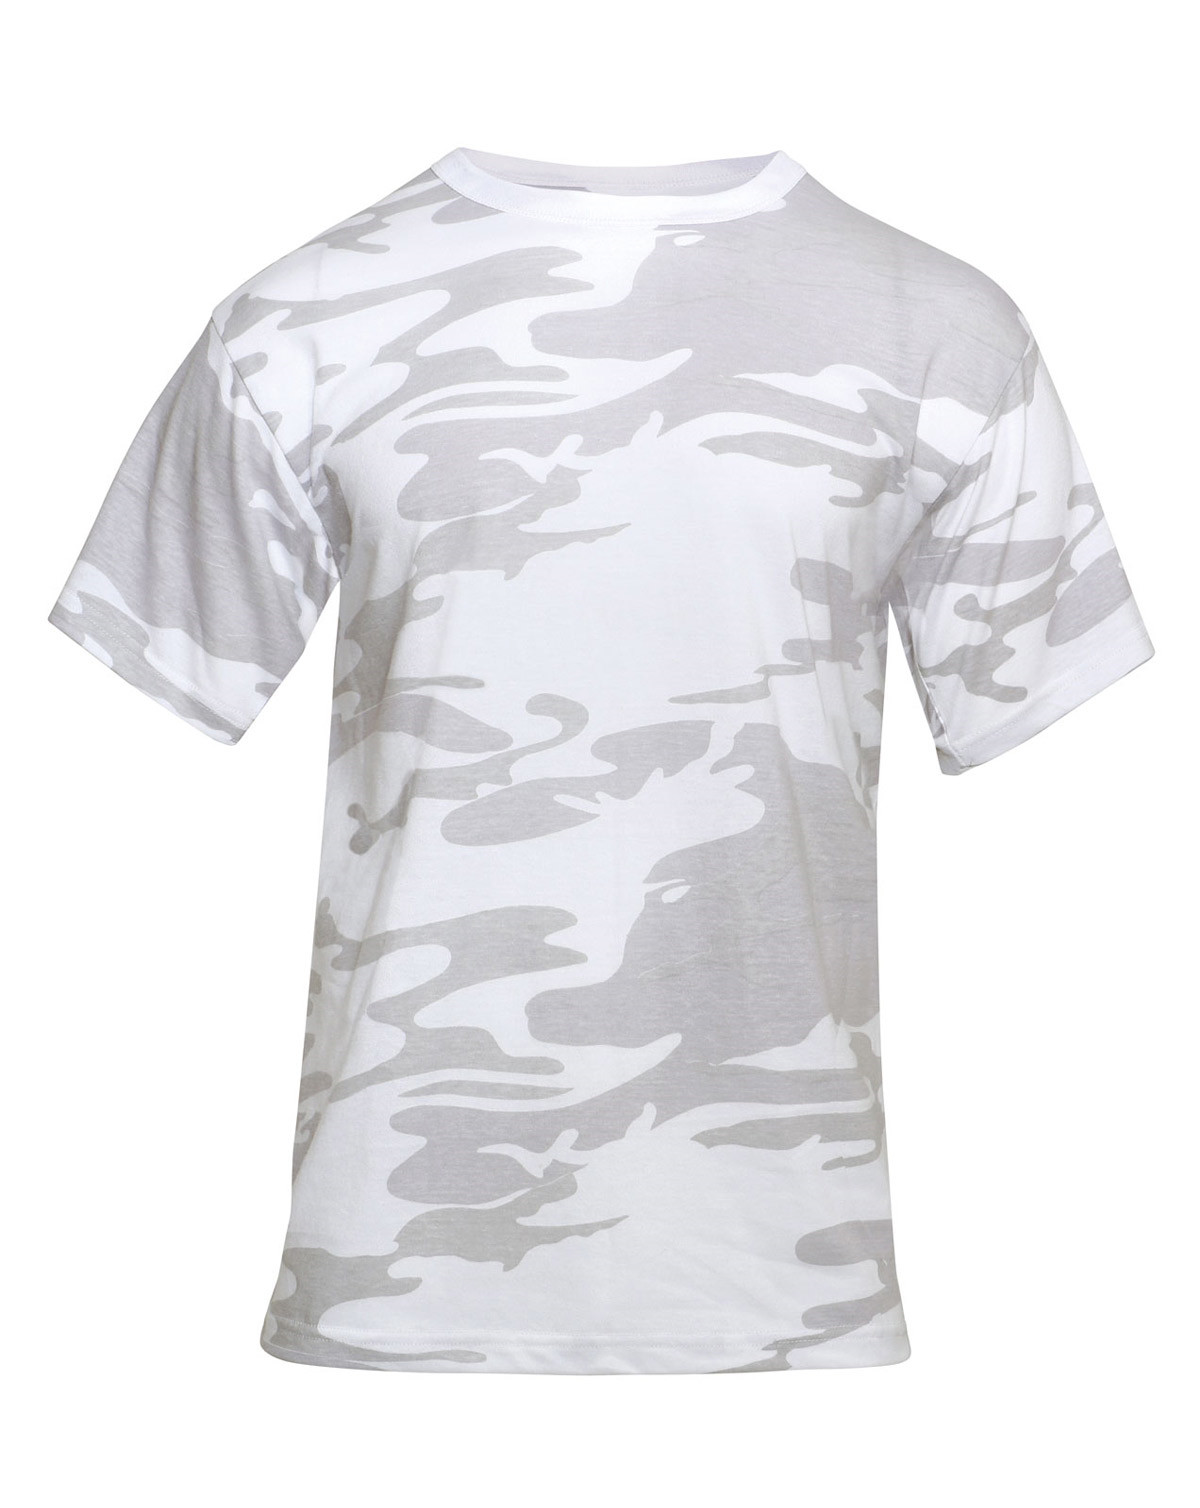 Rothco T-shirt - Mange Camouflager (Grå / Hvid, 2XL)